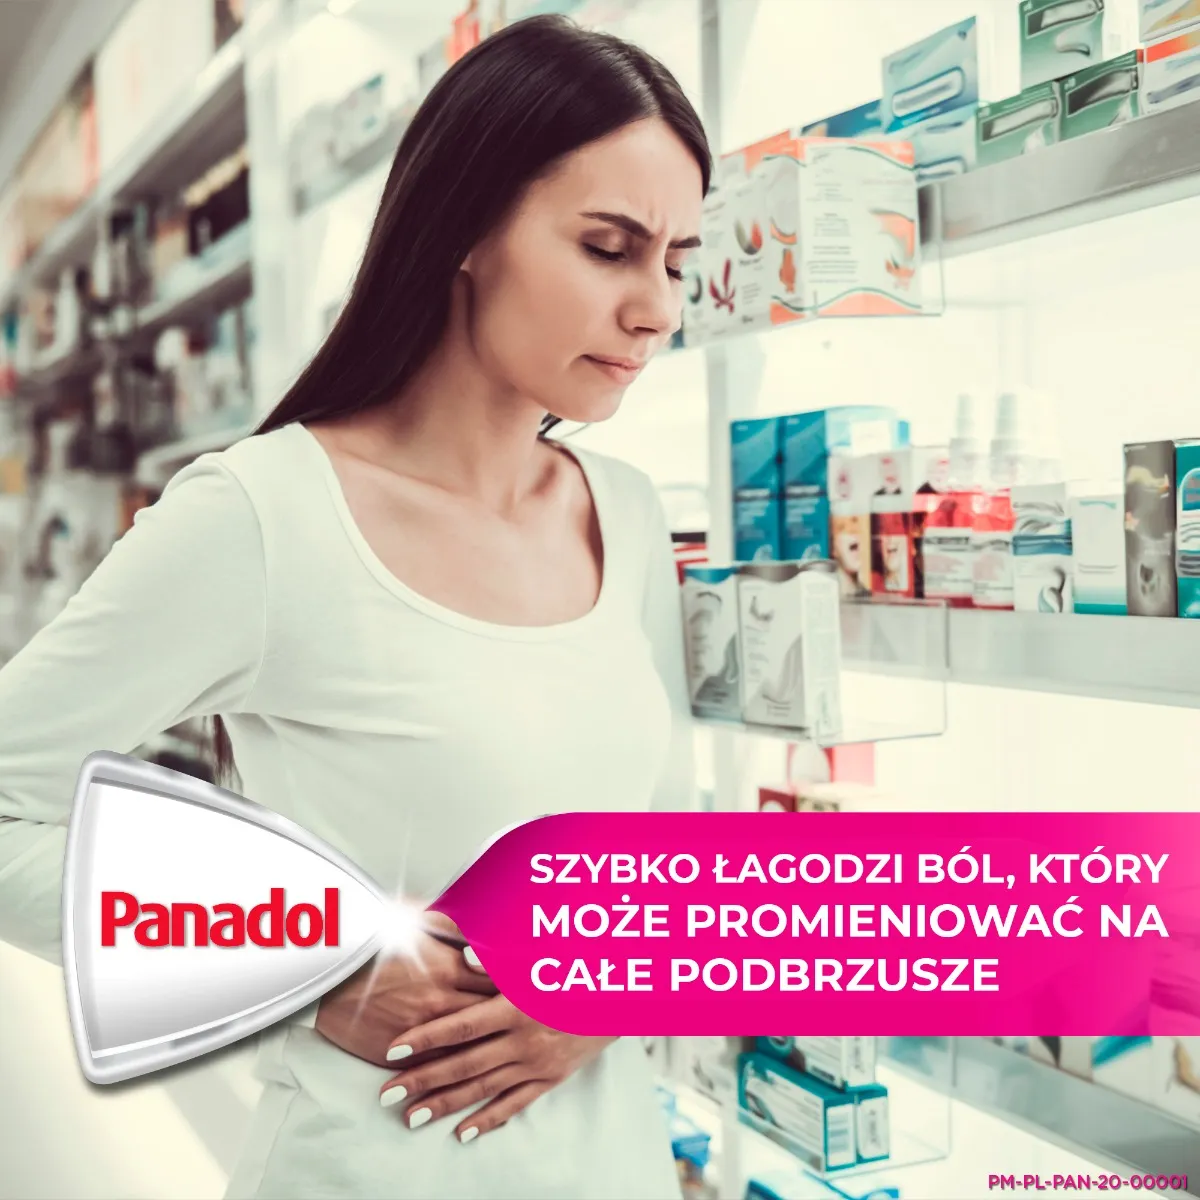 Panadol Femina, 500 mg + 10 mg, 10 tabletek 